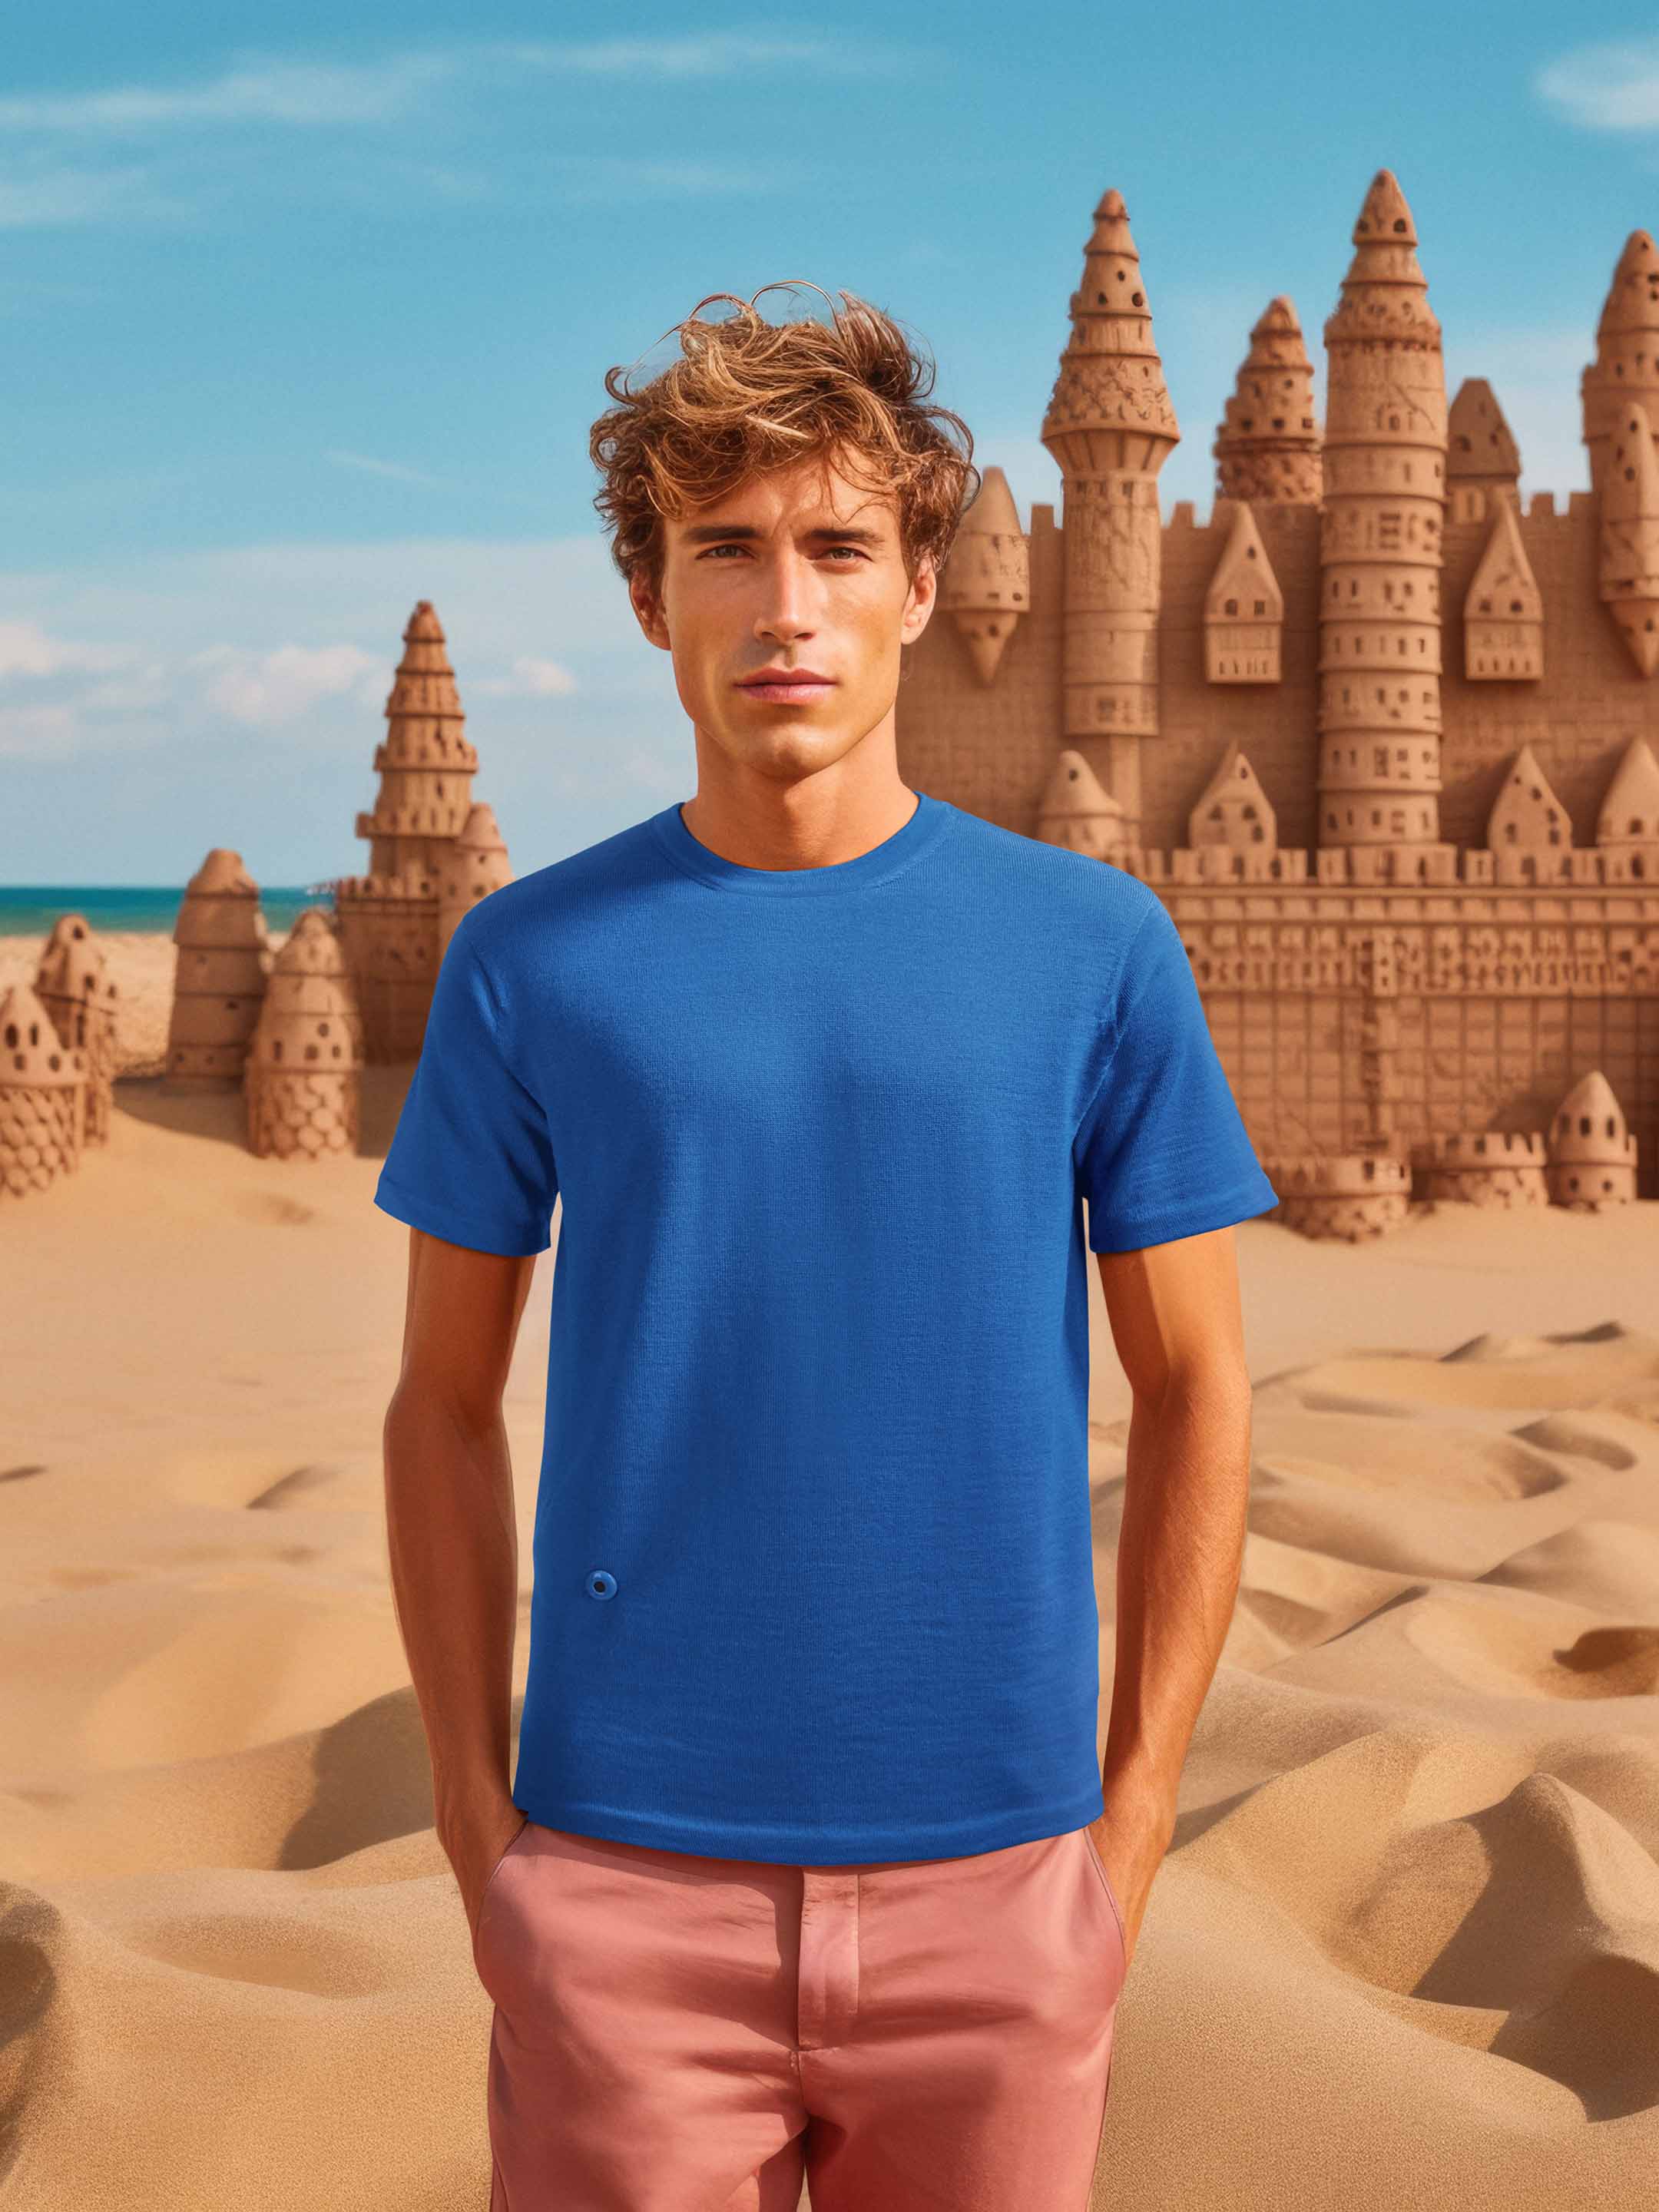 Everyday Seamless T-shirt Mid Sleeve Desert Sand